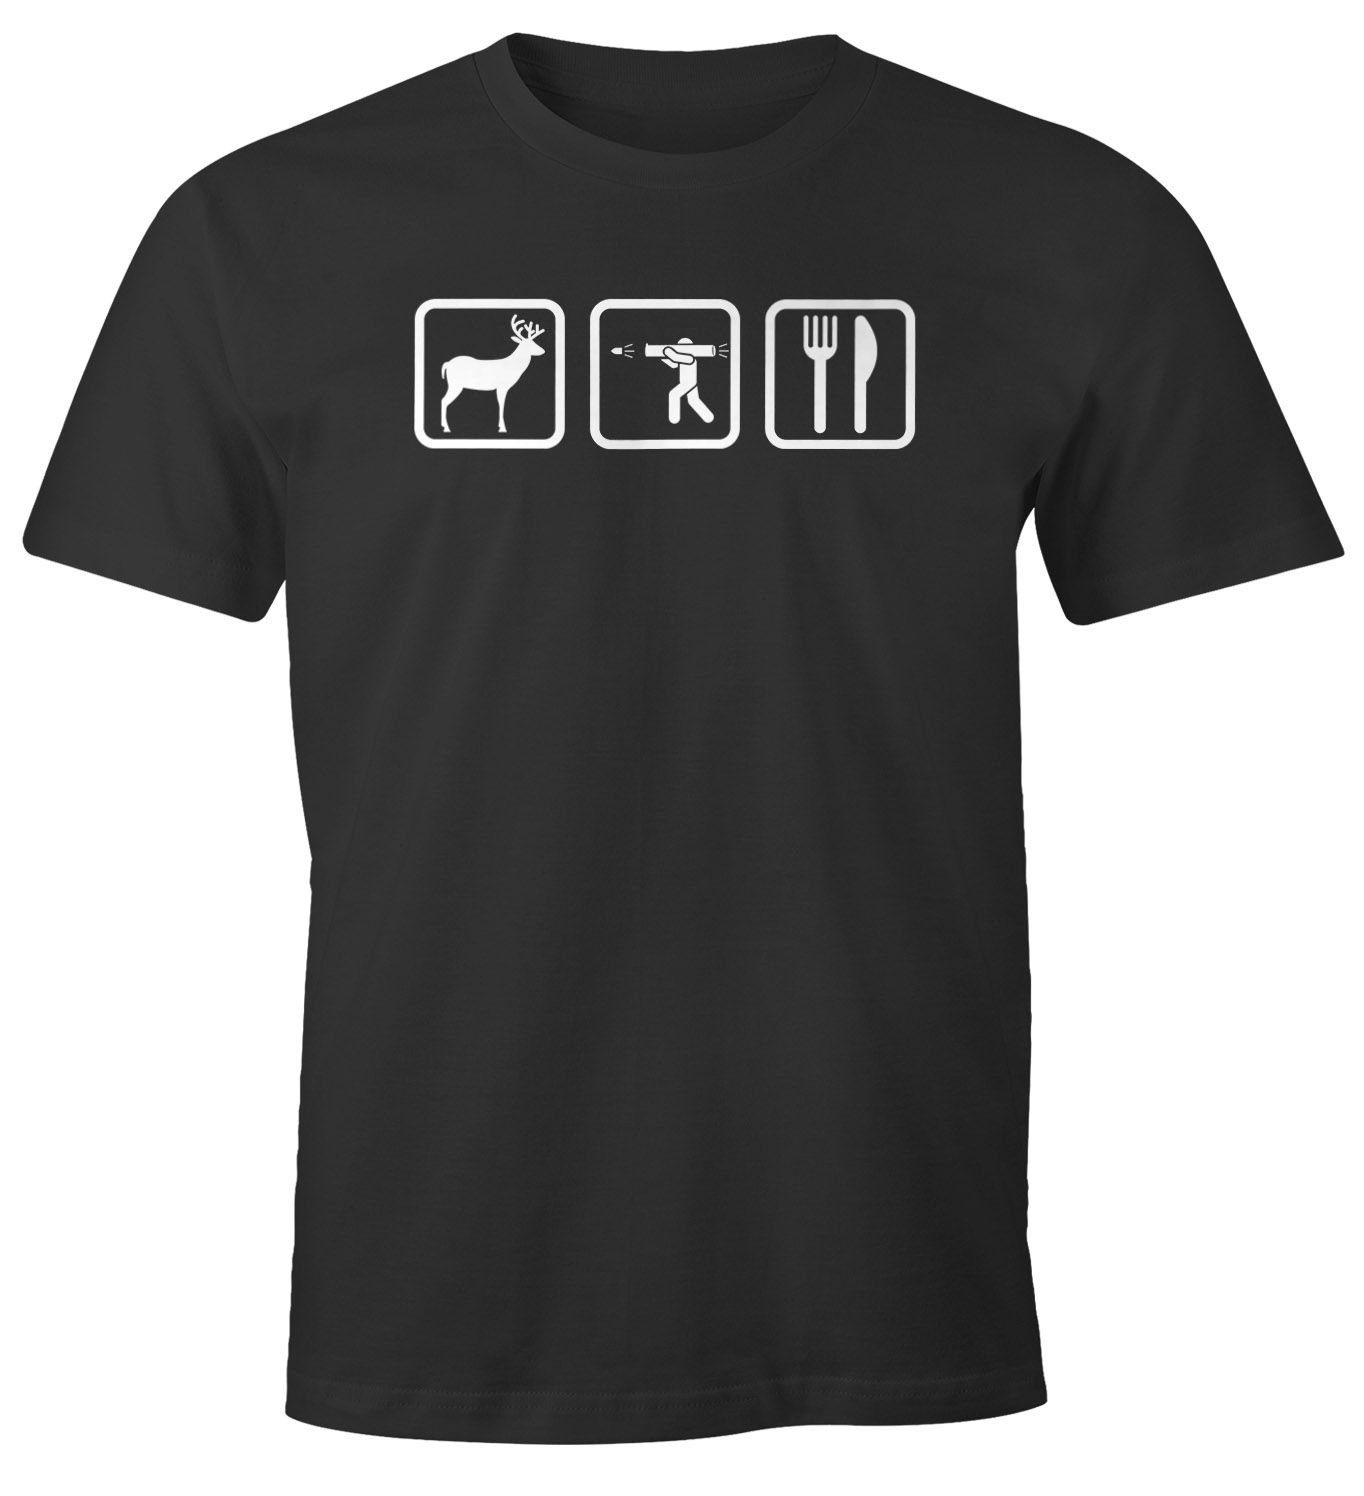 MoonWorks Print-Shirt Herren T-Shirt Kochhirt Grillshirt mit Symbolen Hirsch Jäger Besteck Fun-Shirt Moonworks® mit Print | T-Shirts